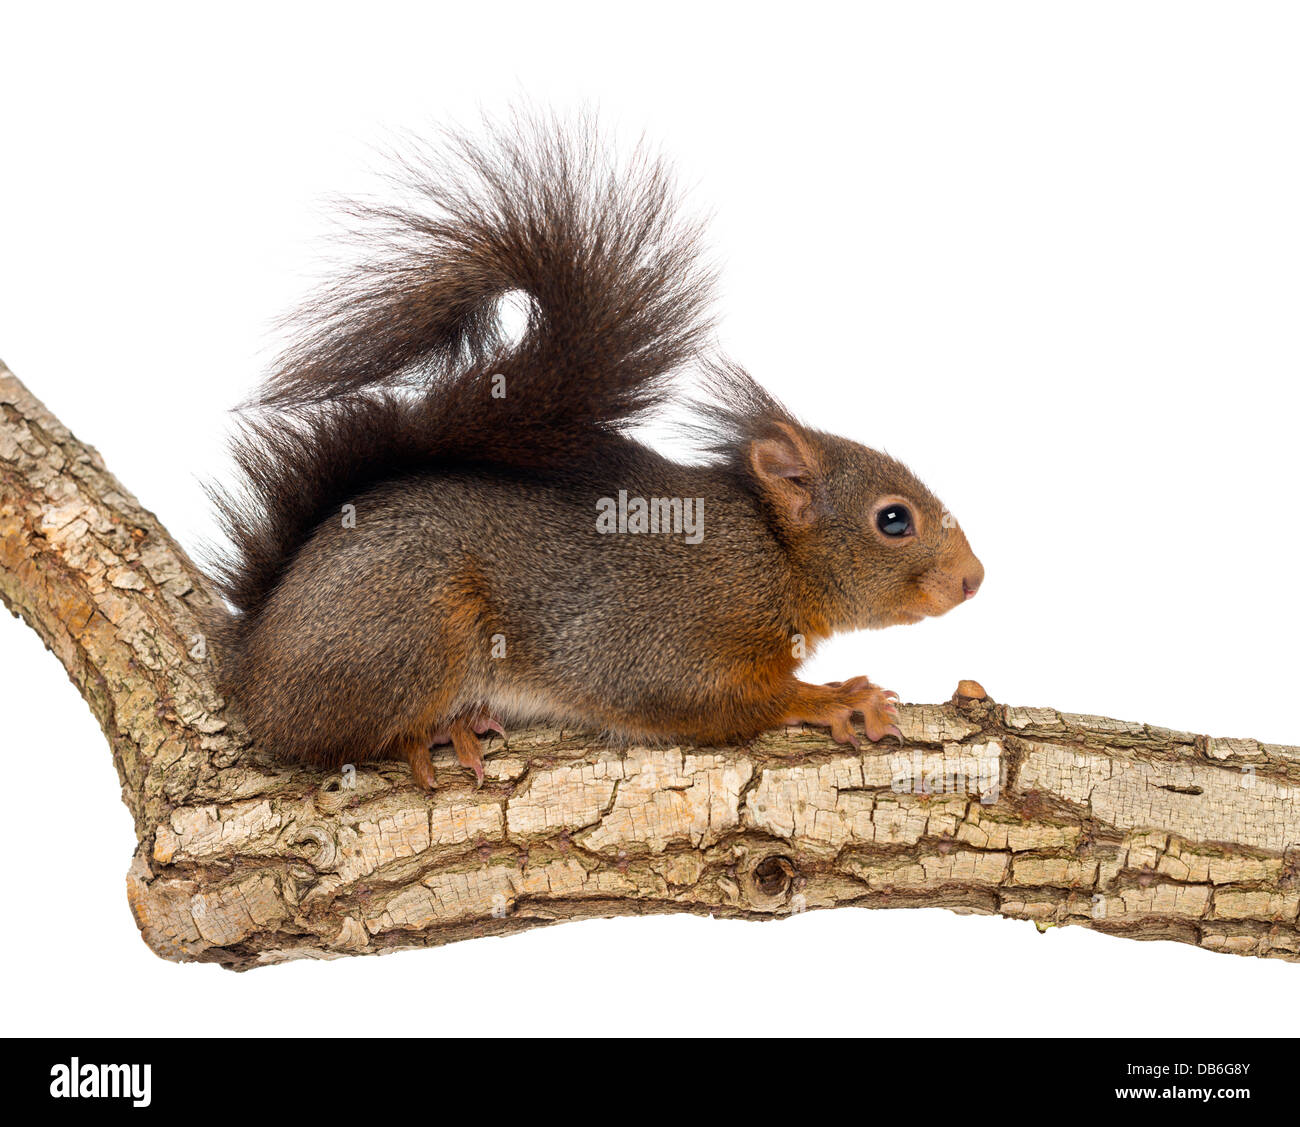 Red squirrel or Eurasian red squirrel, Sciurus vulgaris, on branch against white background Stock Photo